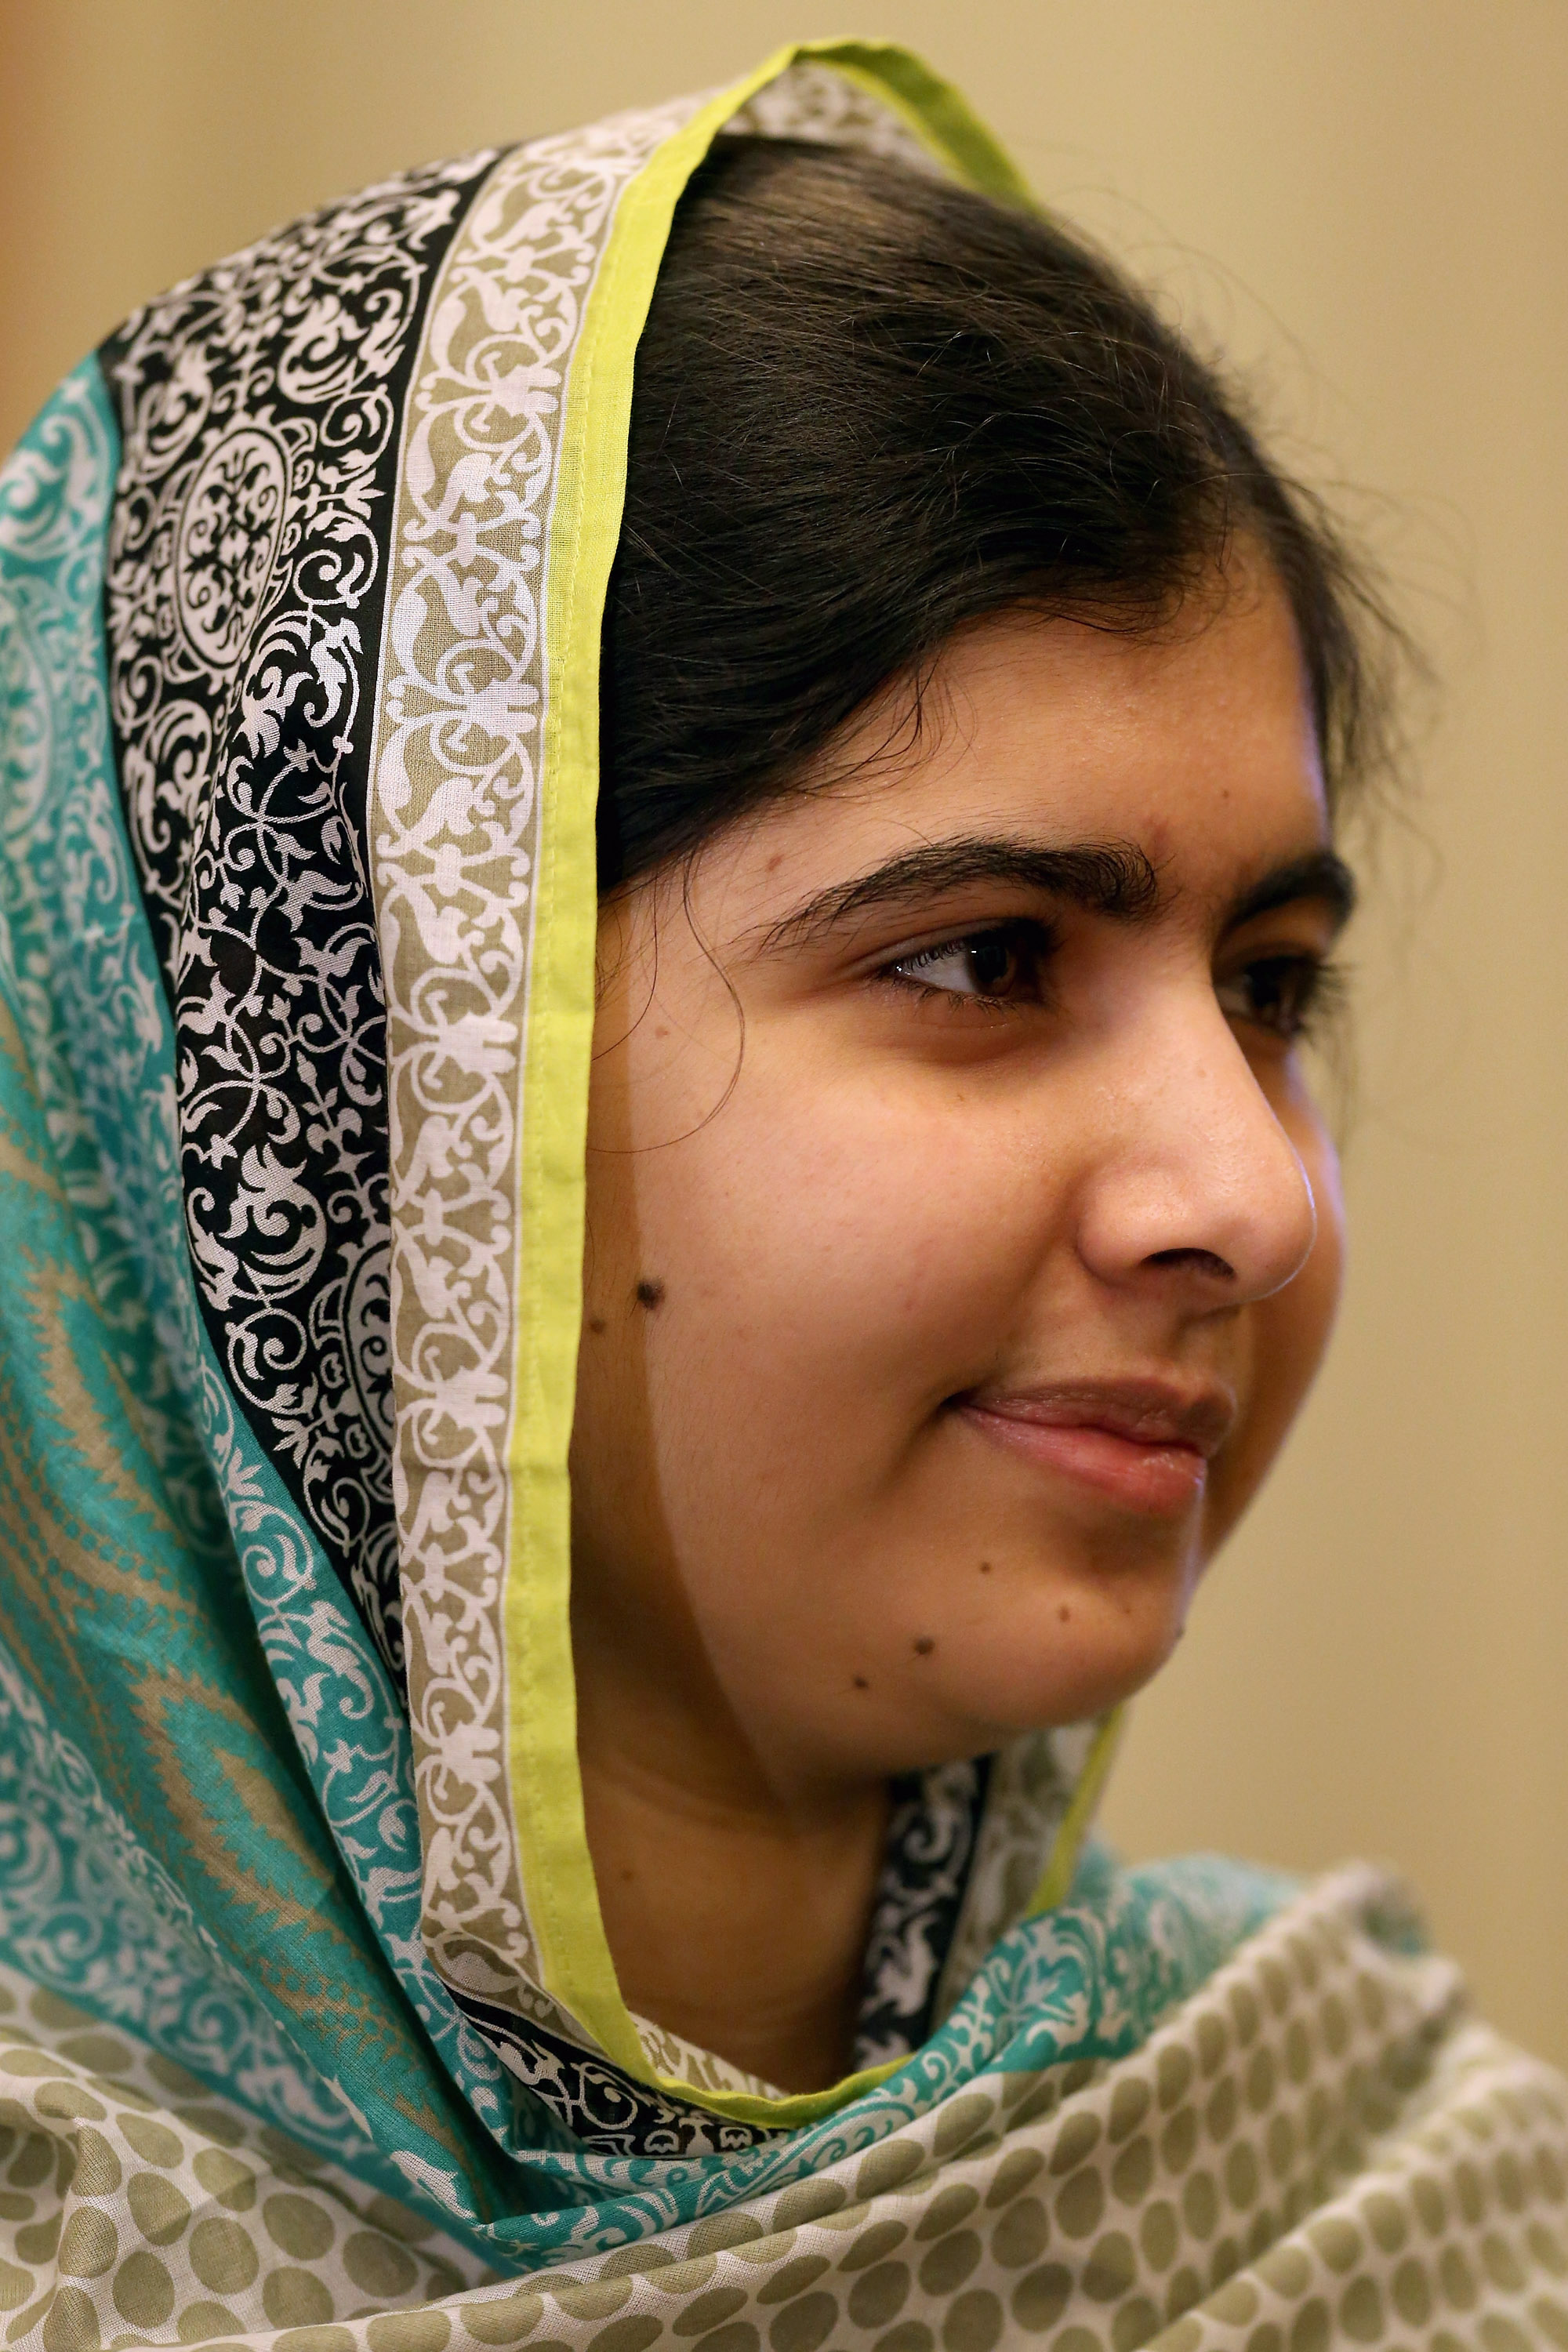 Congressional Leaders Meet With Nobel Winner Malala Yousafzai